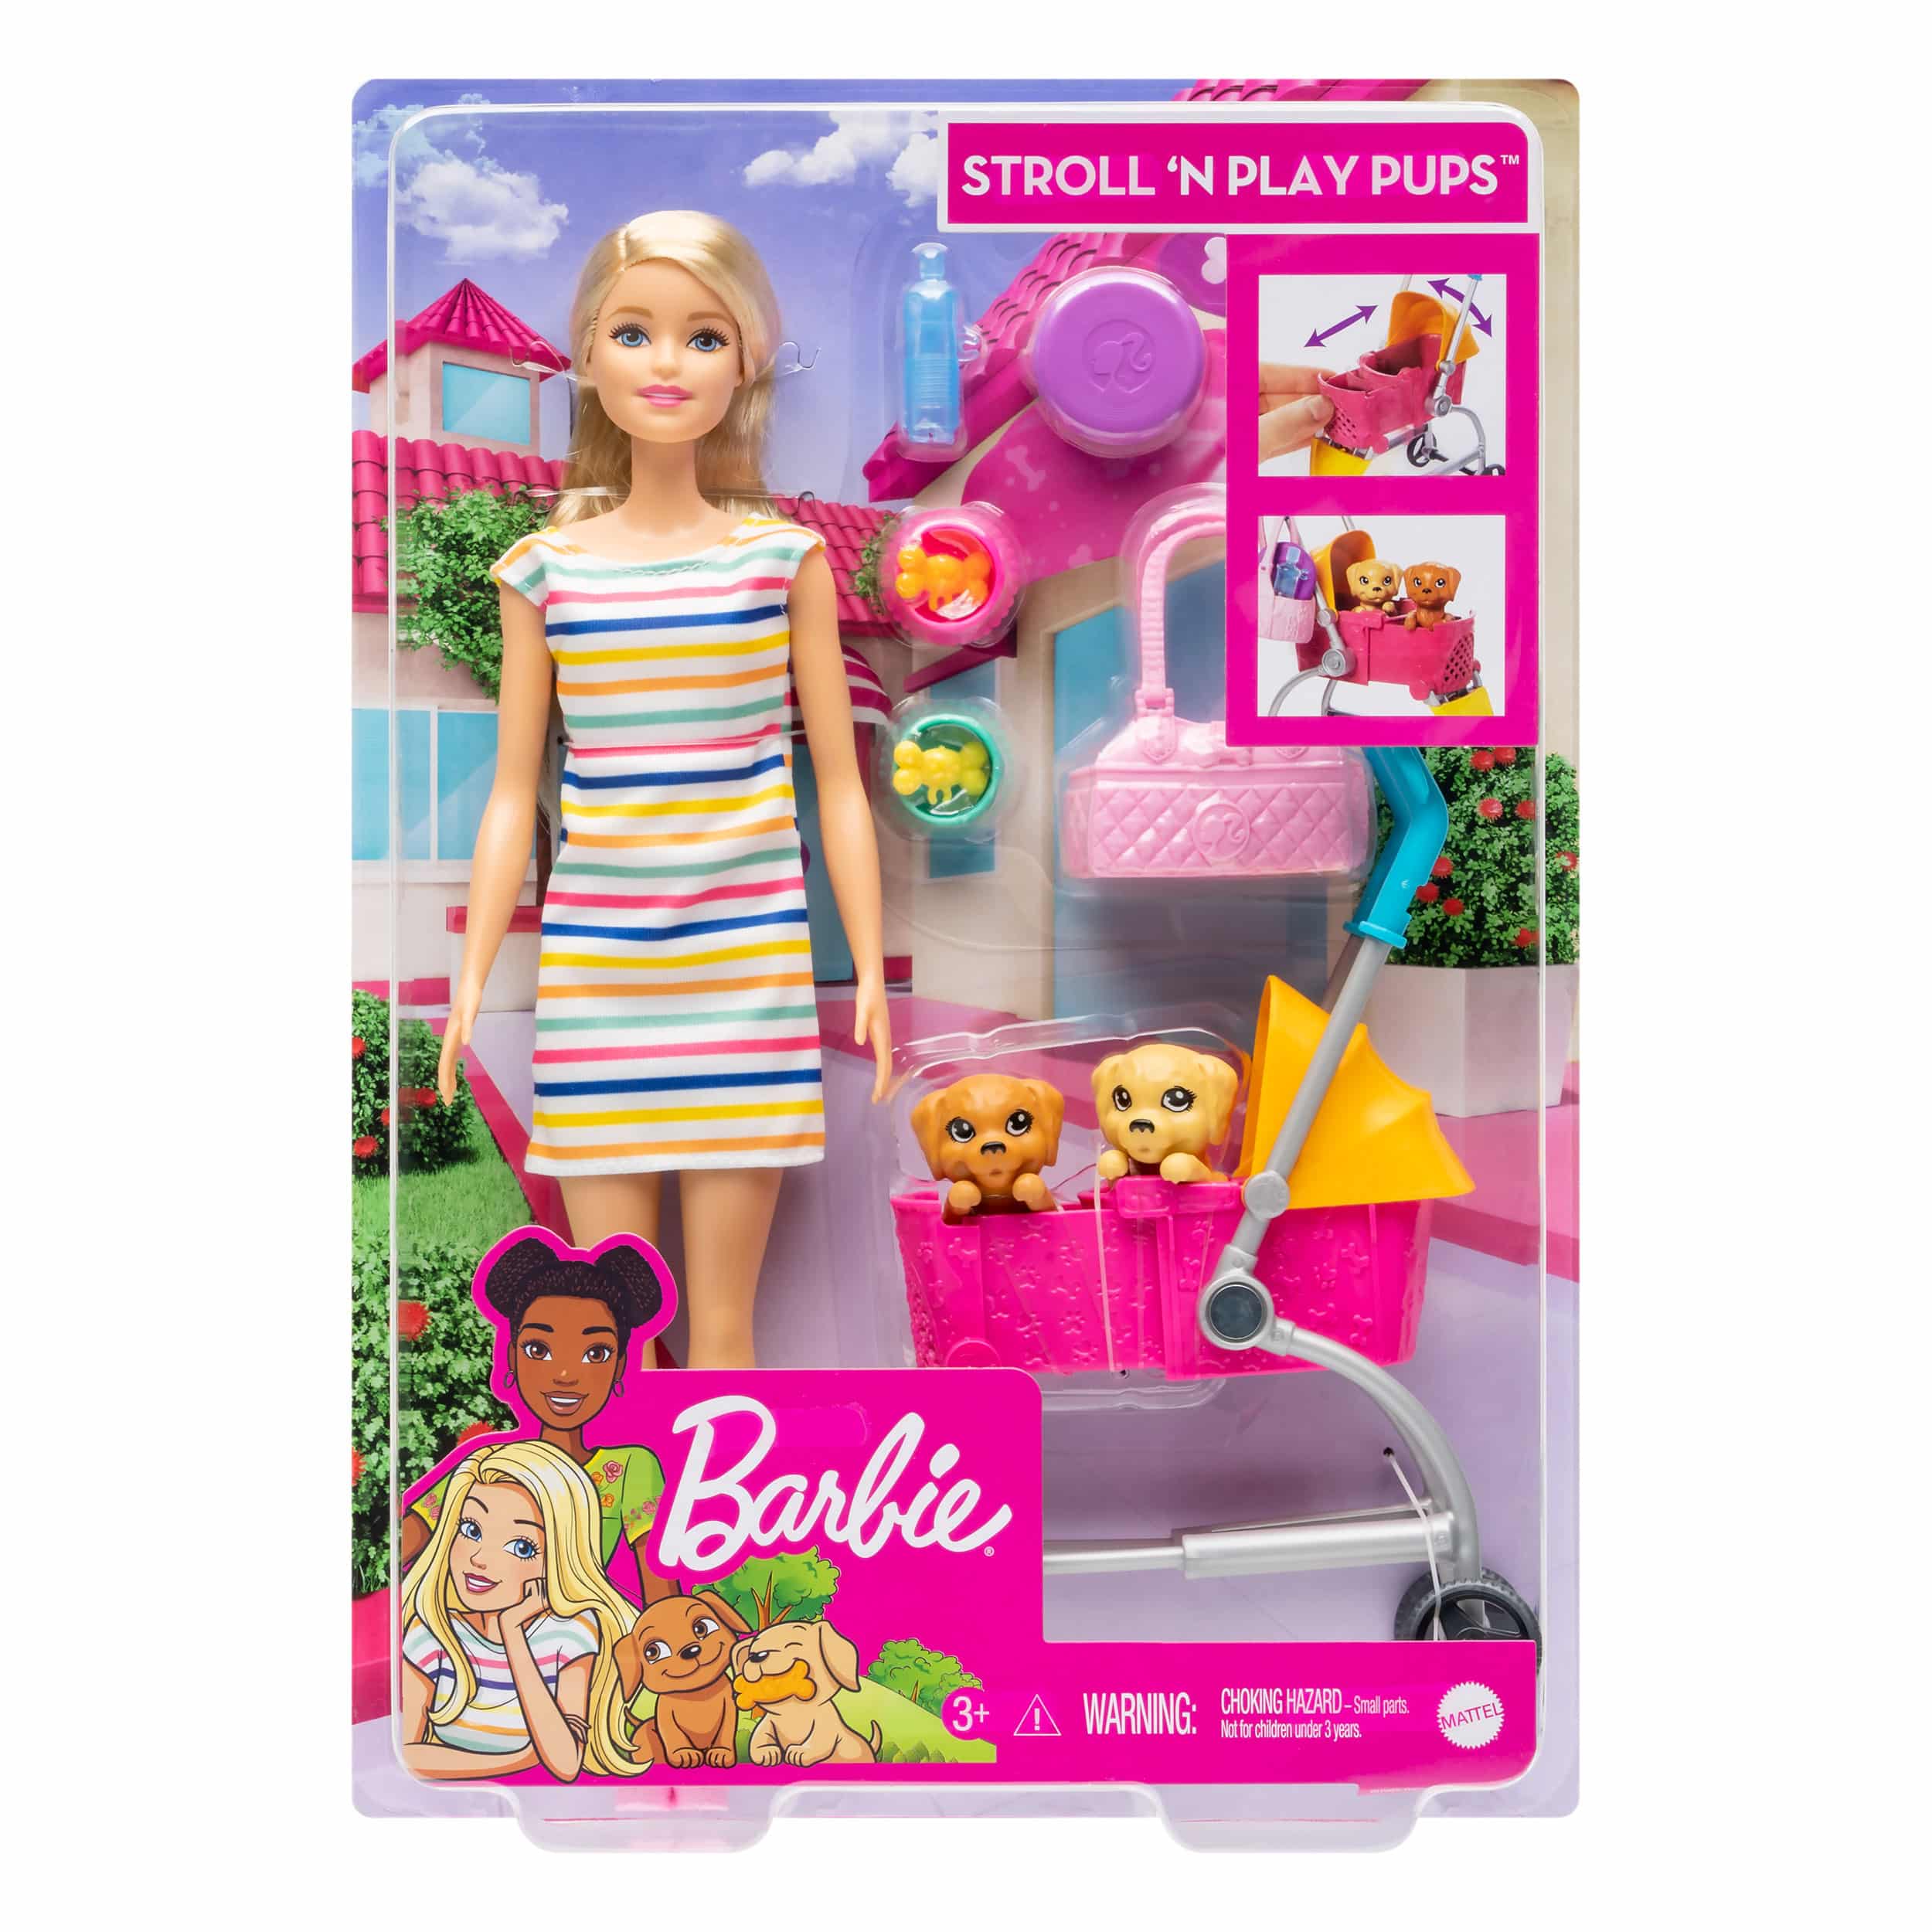 Barbie - Stroll 'N Play Pups